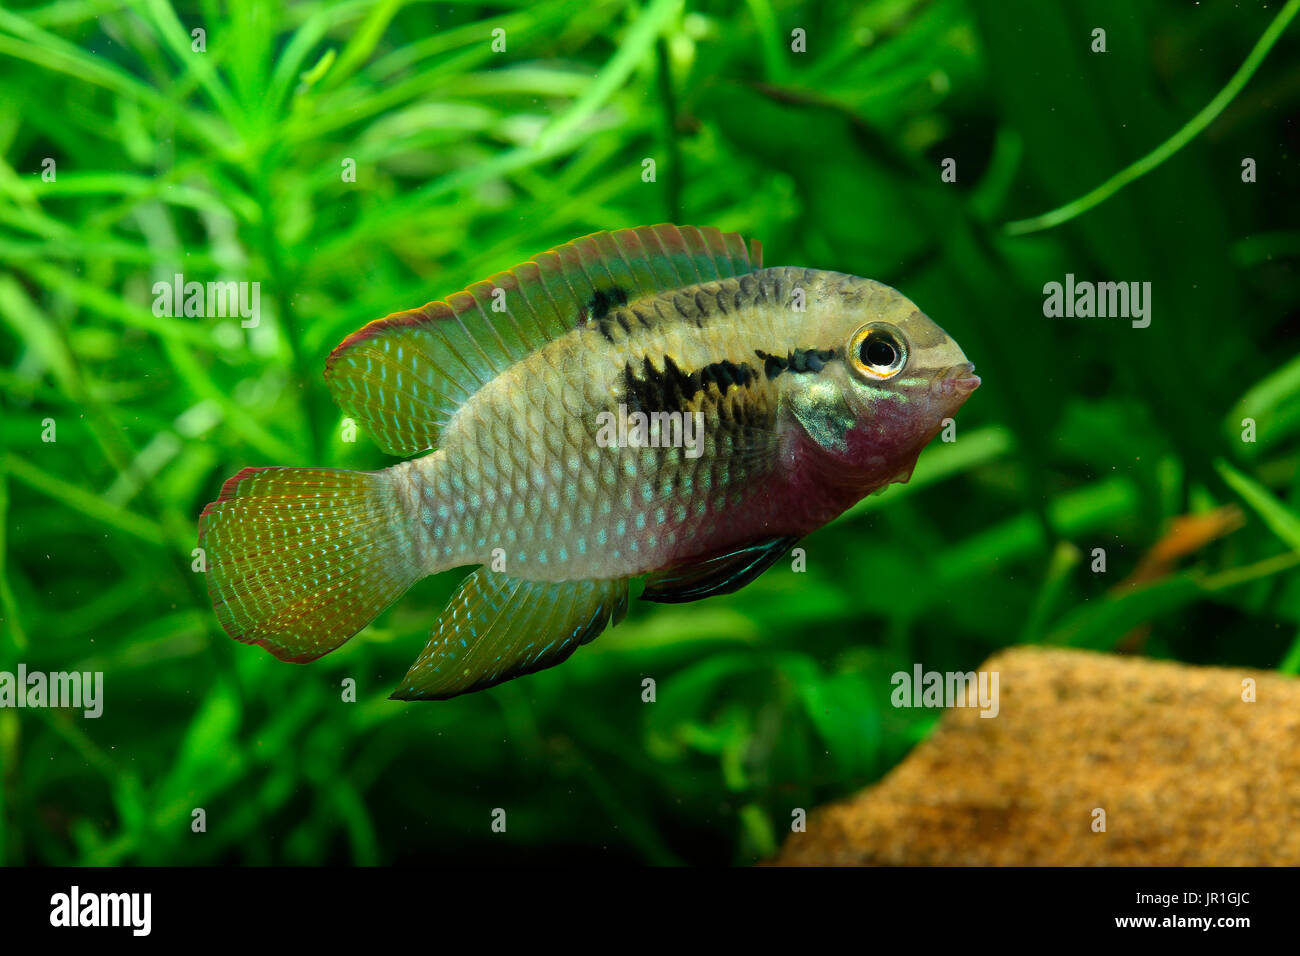 Redbreast acara (Laetacara dorsigera) male in aquarium Stock Photo